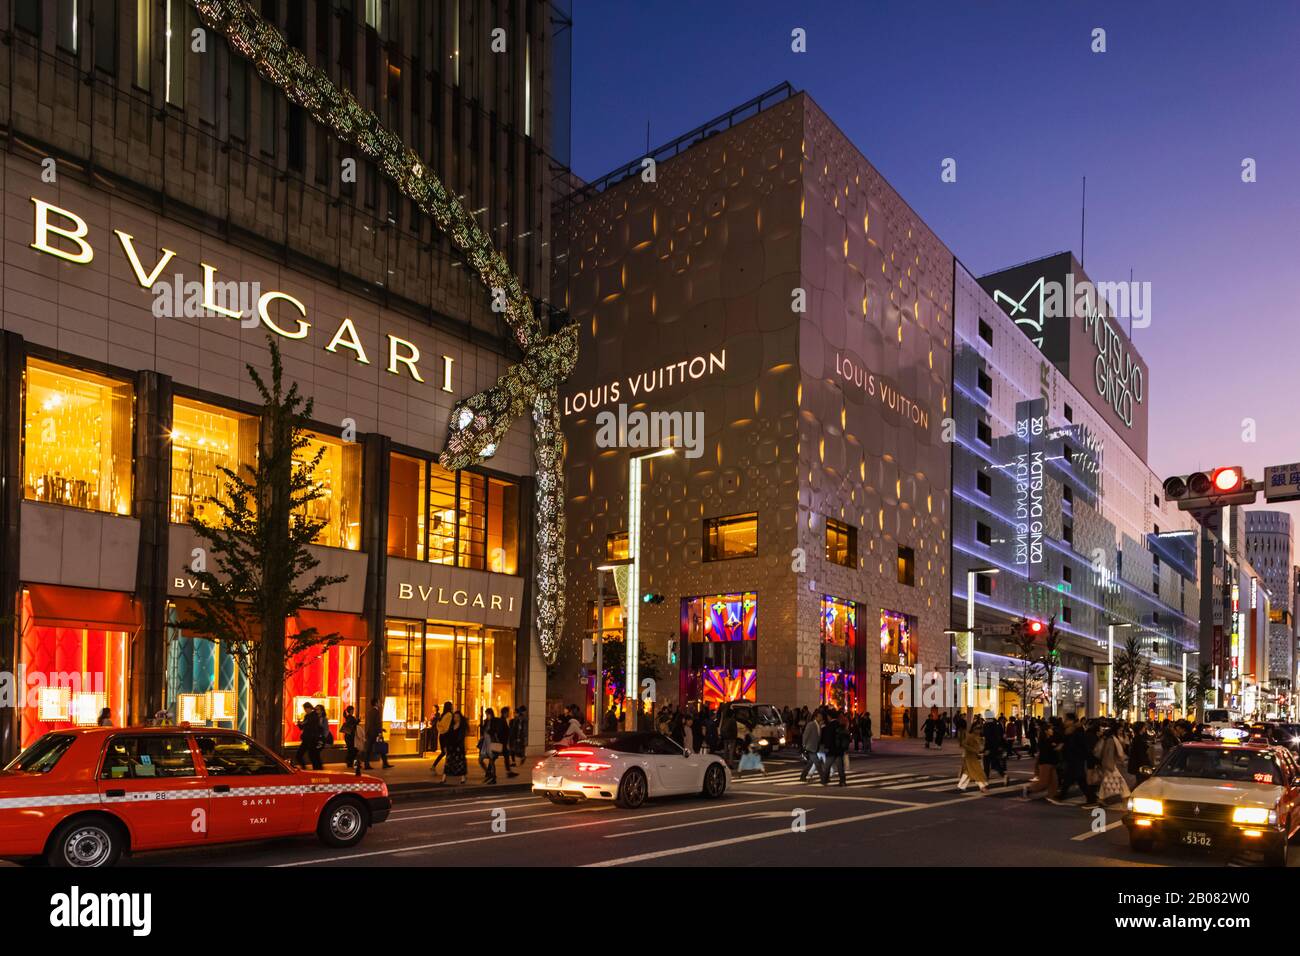 Japan, Honshu, Tokyo, Ginza, Louis Vuitton Store Stock Photo - Alamy